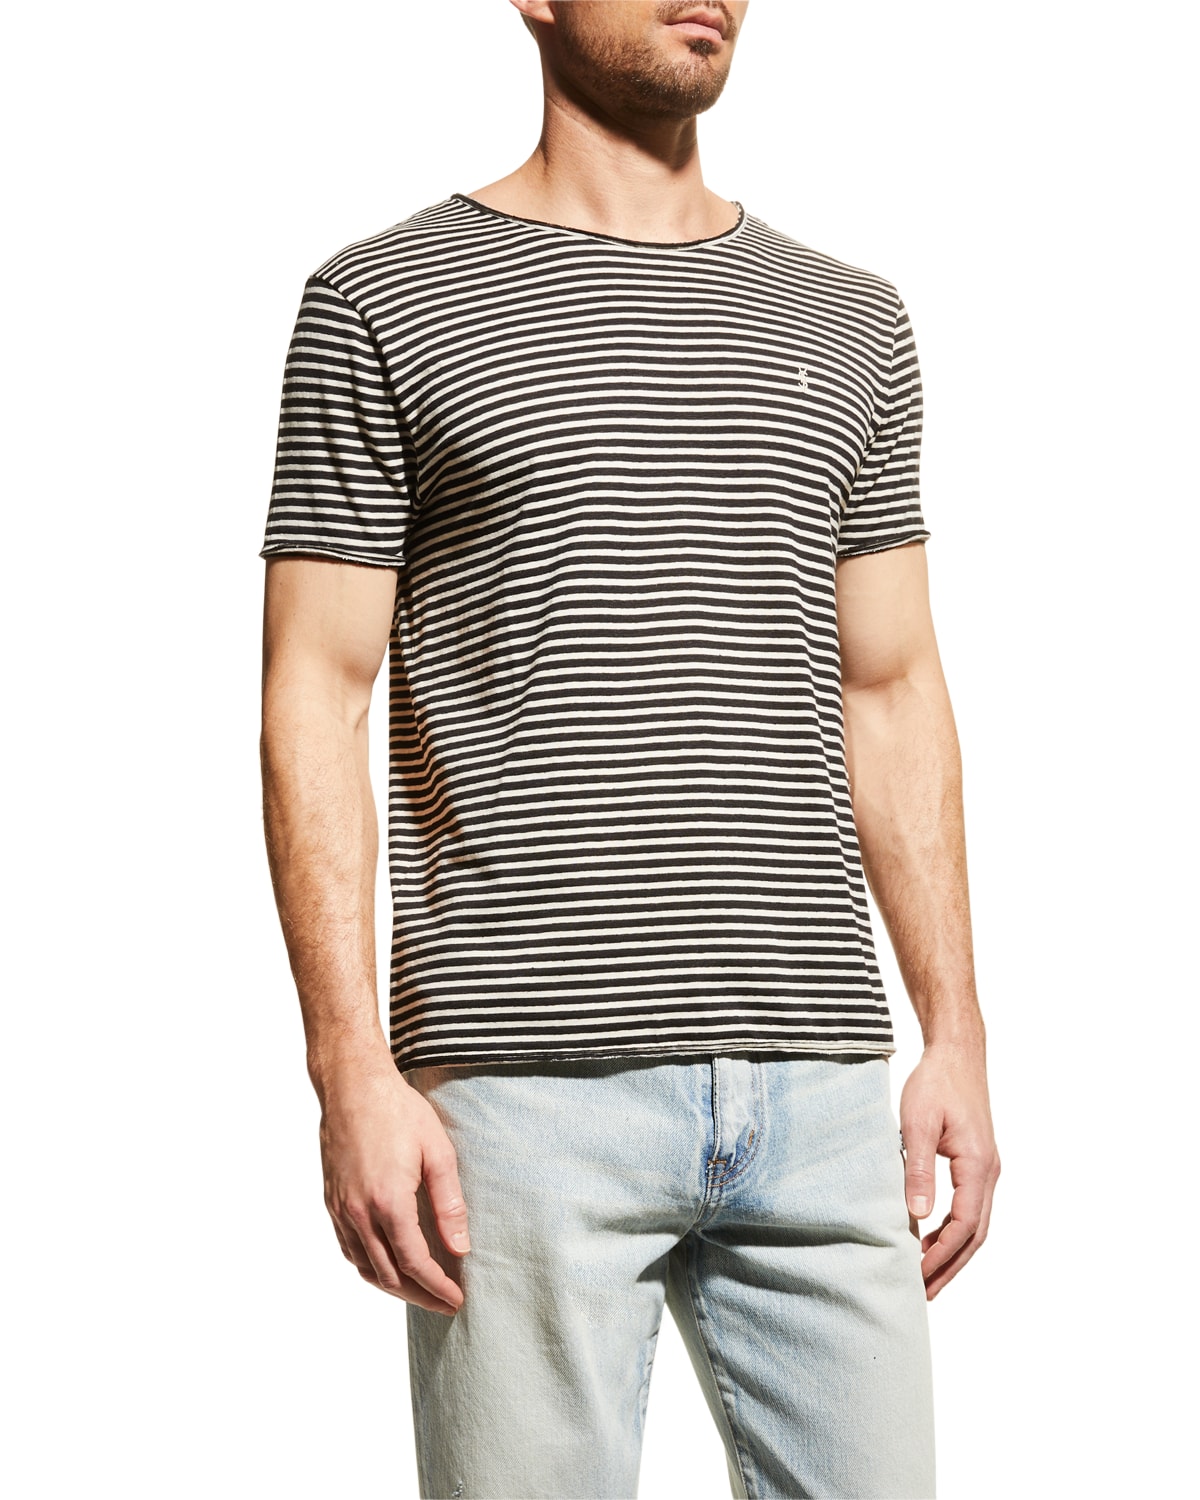 Black Gray Color Horizontal Striped Slim Fit Lycra Men's T-Shirt Detailed 